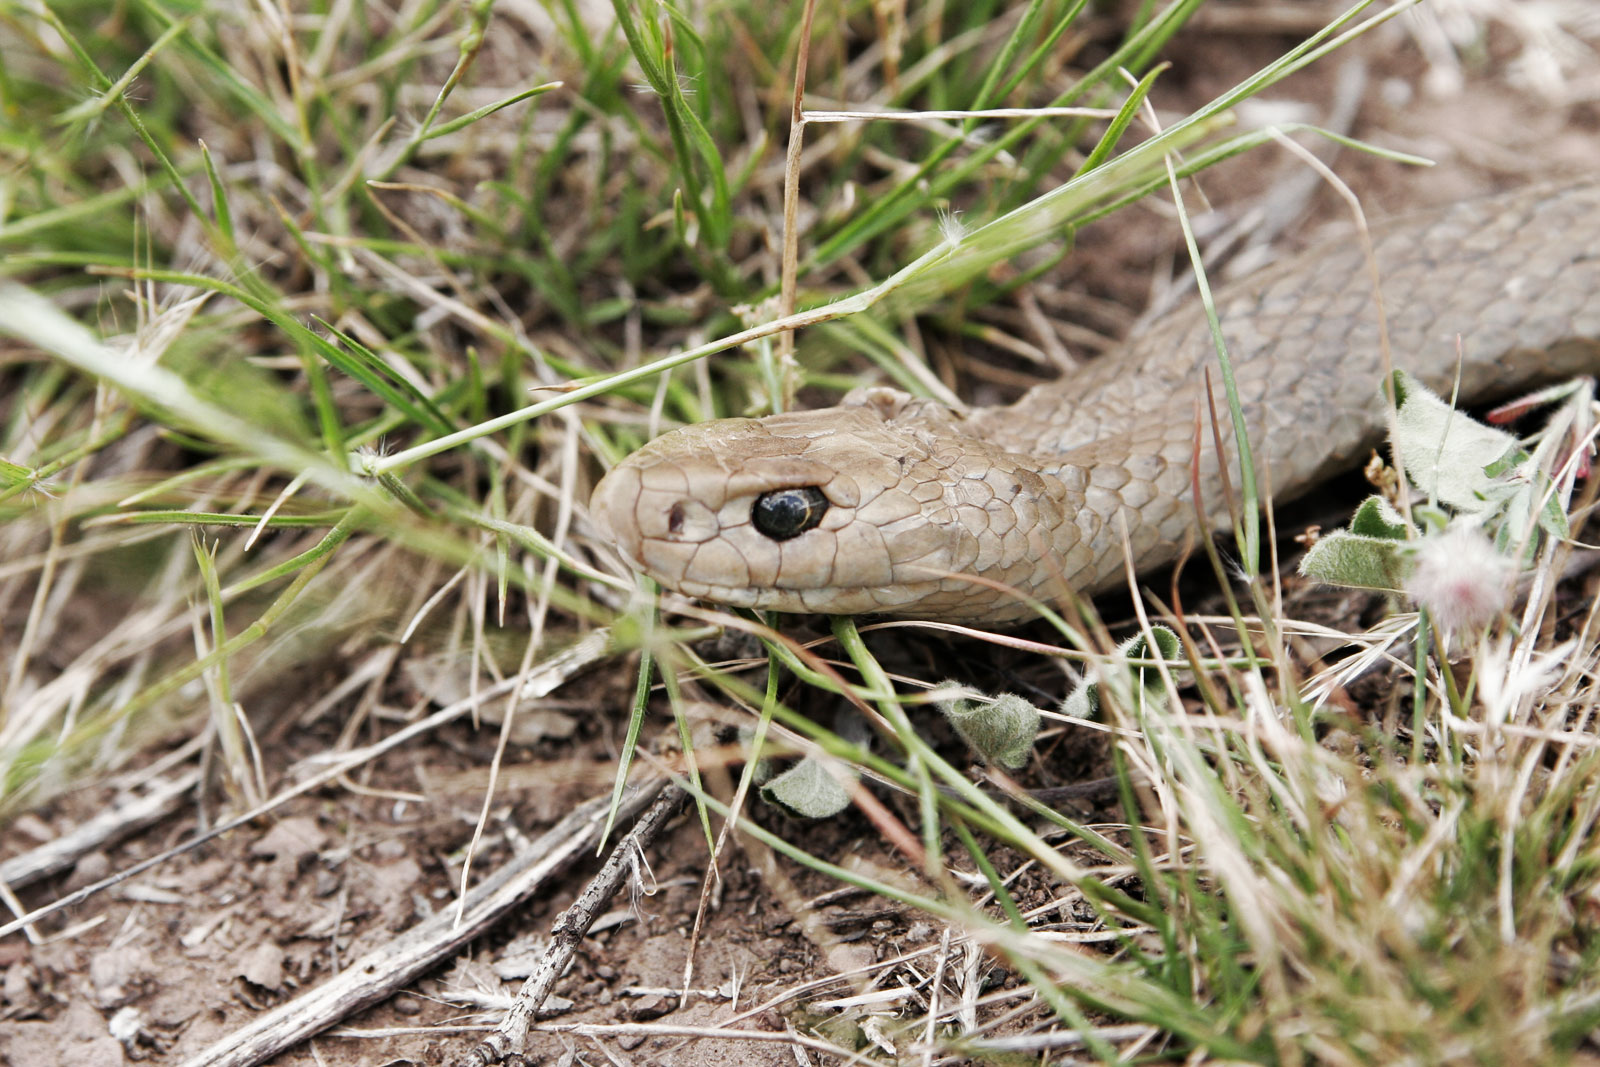 Eastern brown snake (Pseudonaja textilis). Photo by flagstaffotos [at] gmail.com